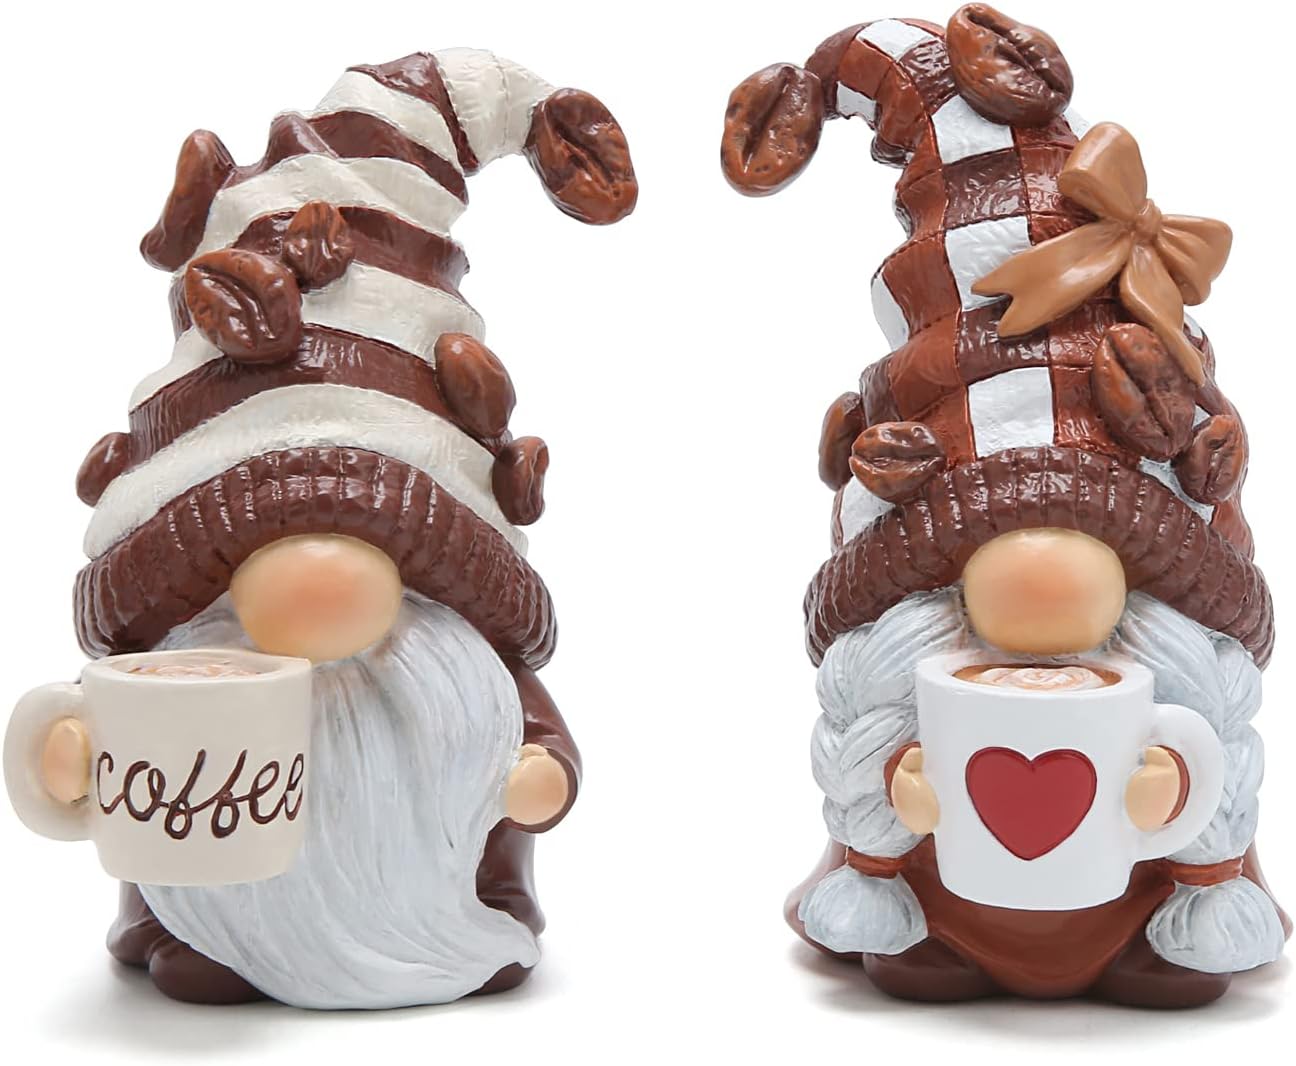 Hodao 2PCS Coffee Gnomes Figurines - Swedish Tomte Elf Dwarf Decor for Bar, Home, Gifts